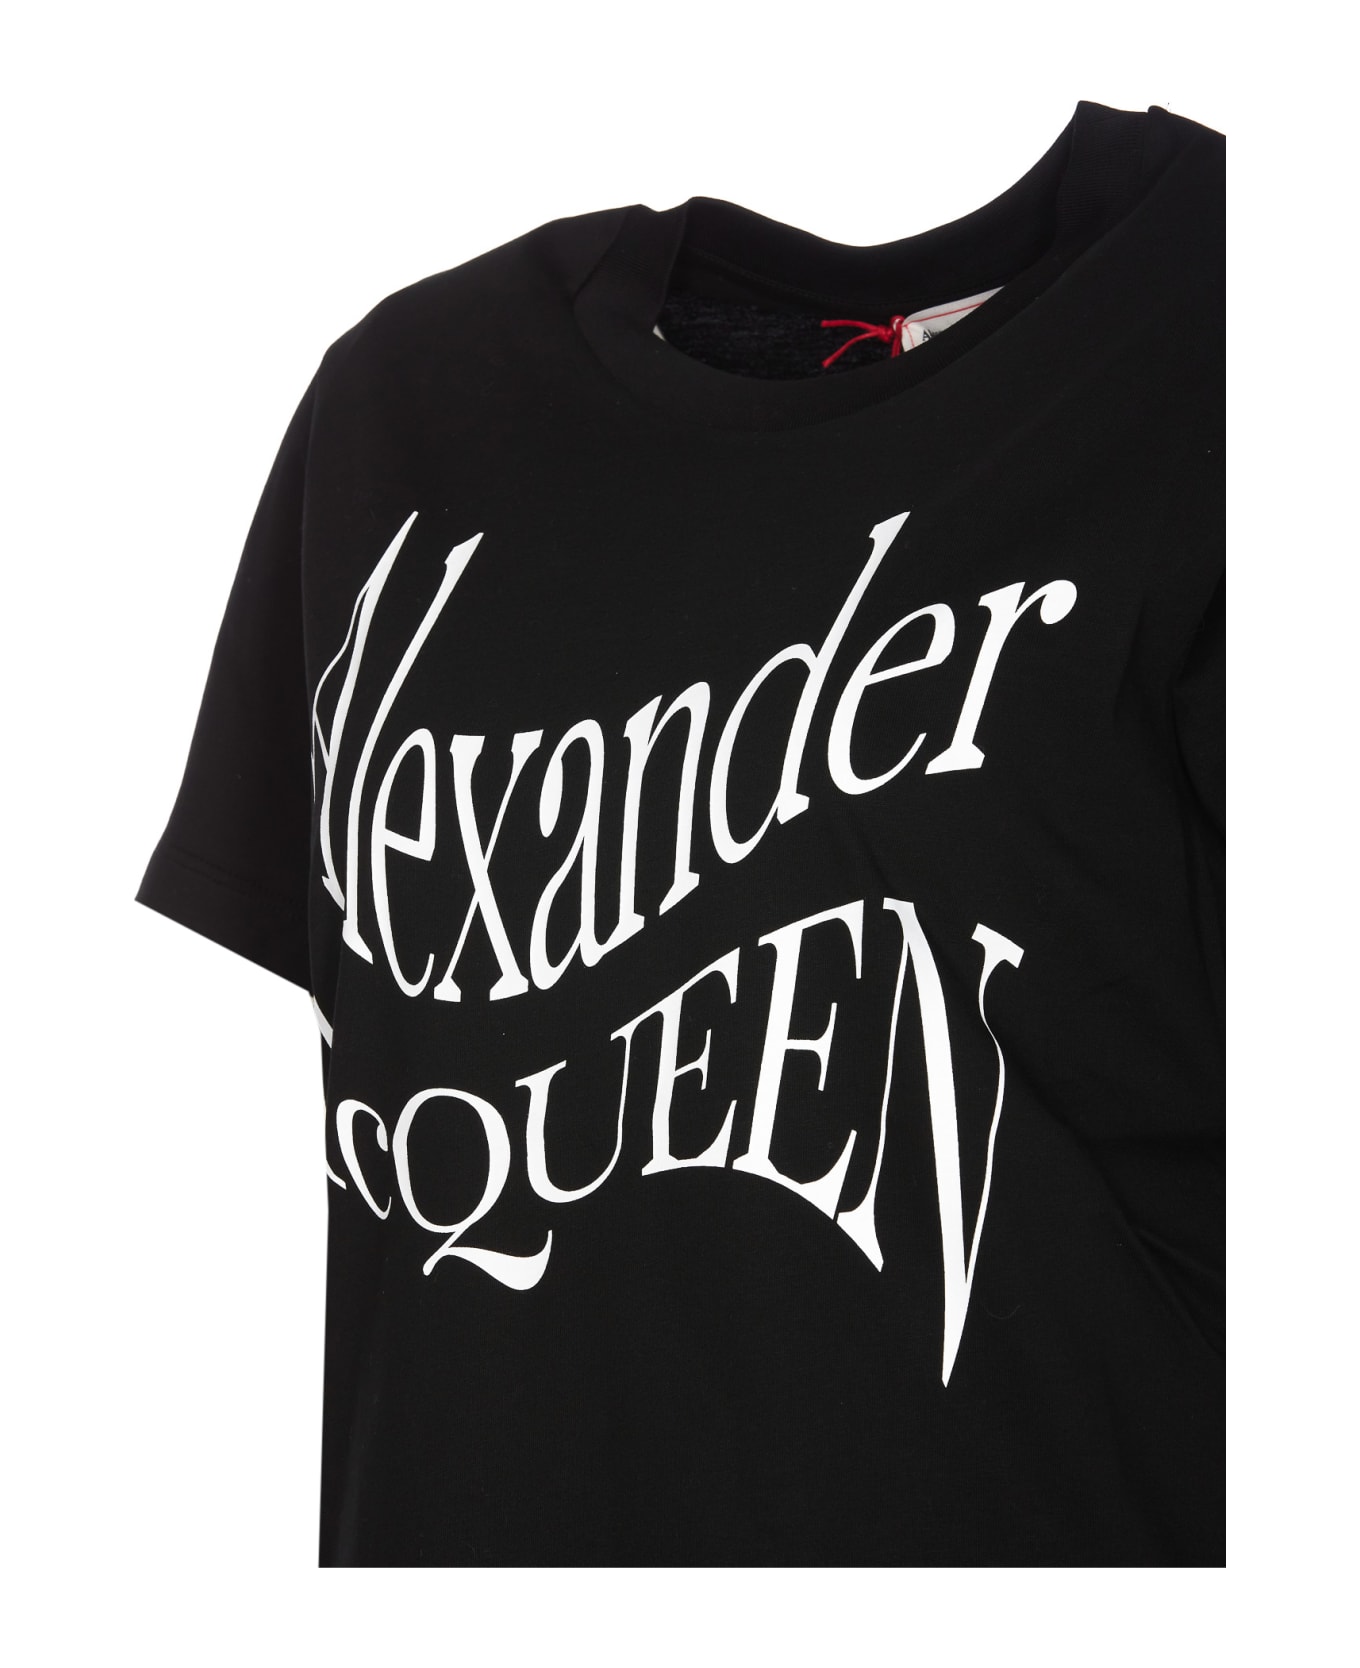 Alexander McQueen Logo Printed Crewneck T-shirt - Black